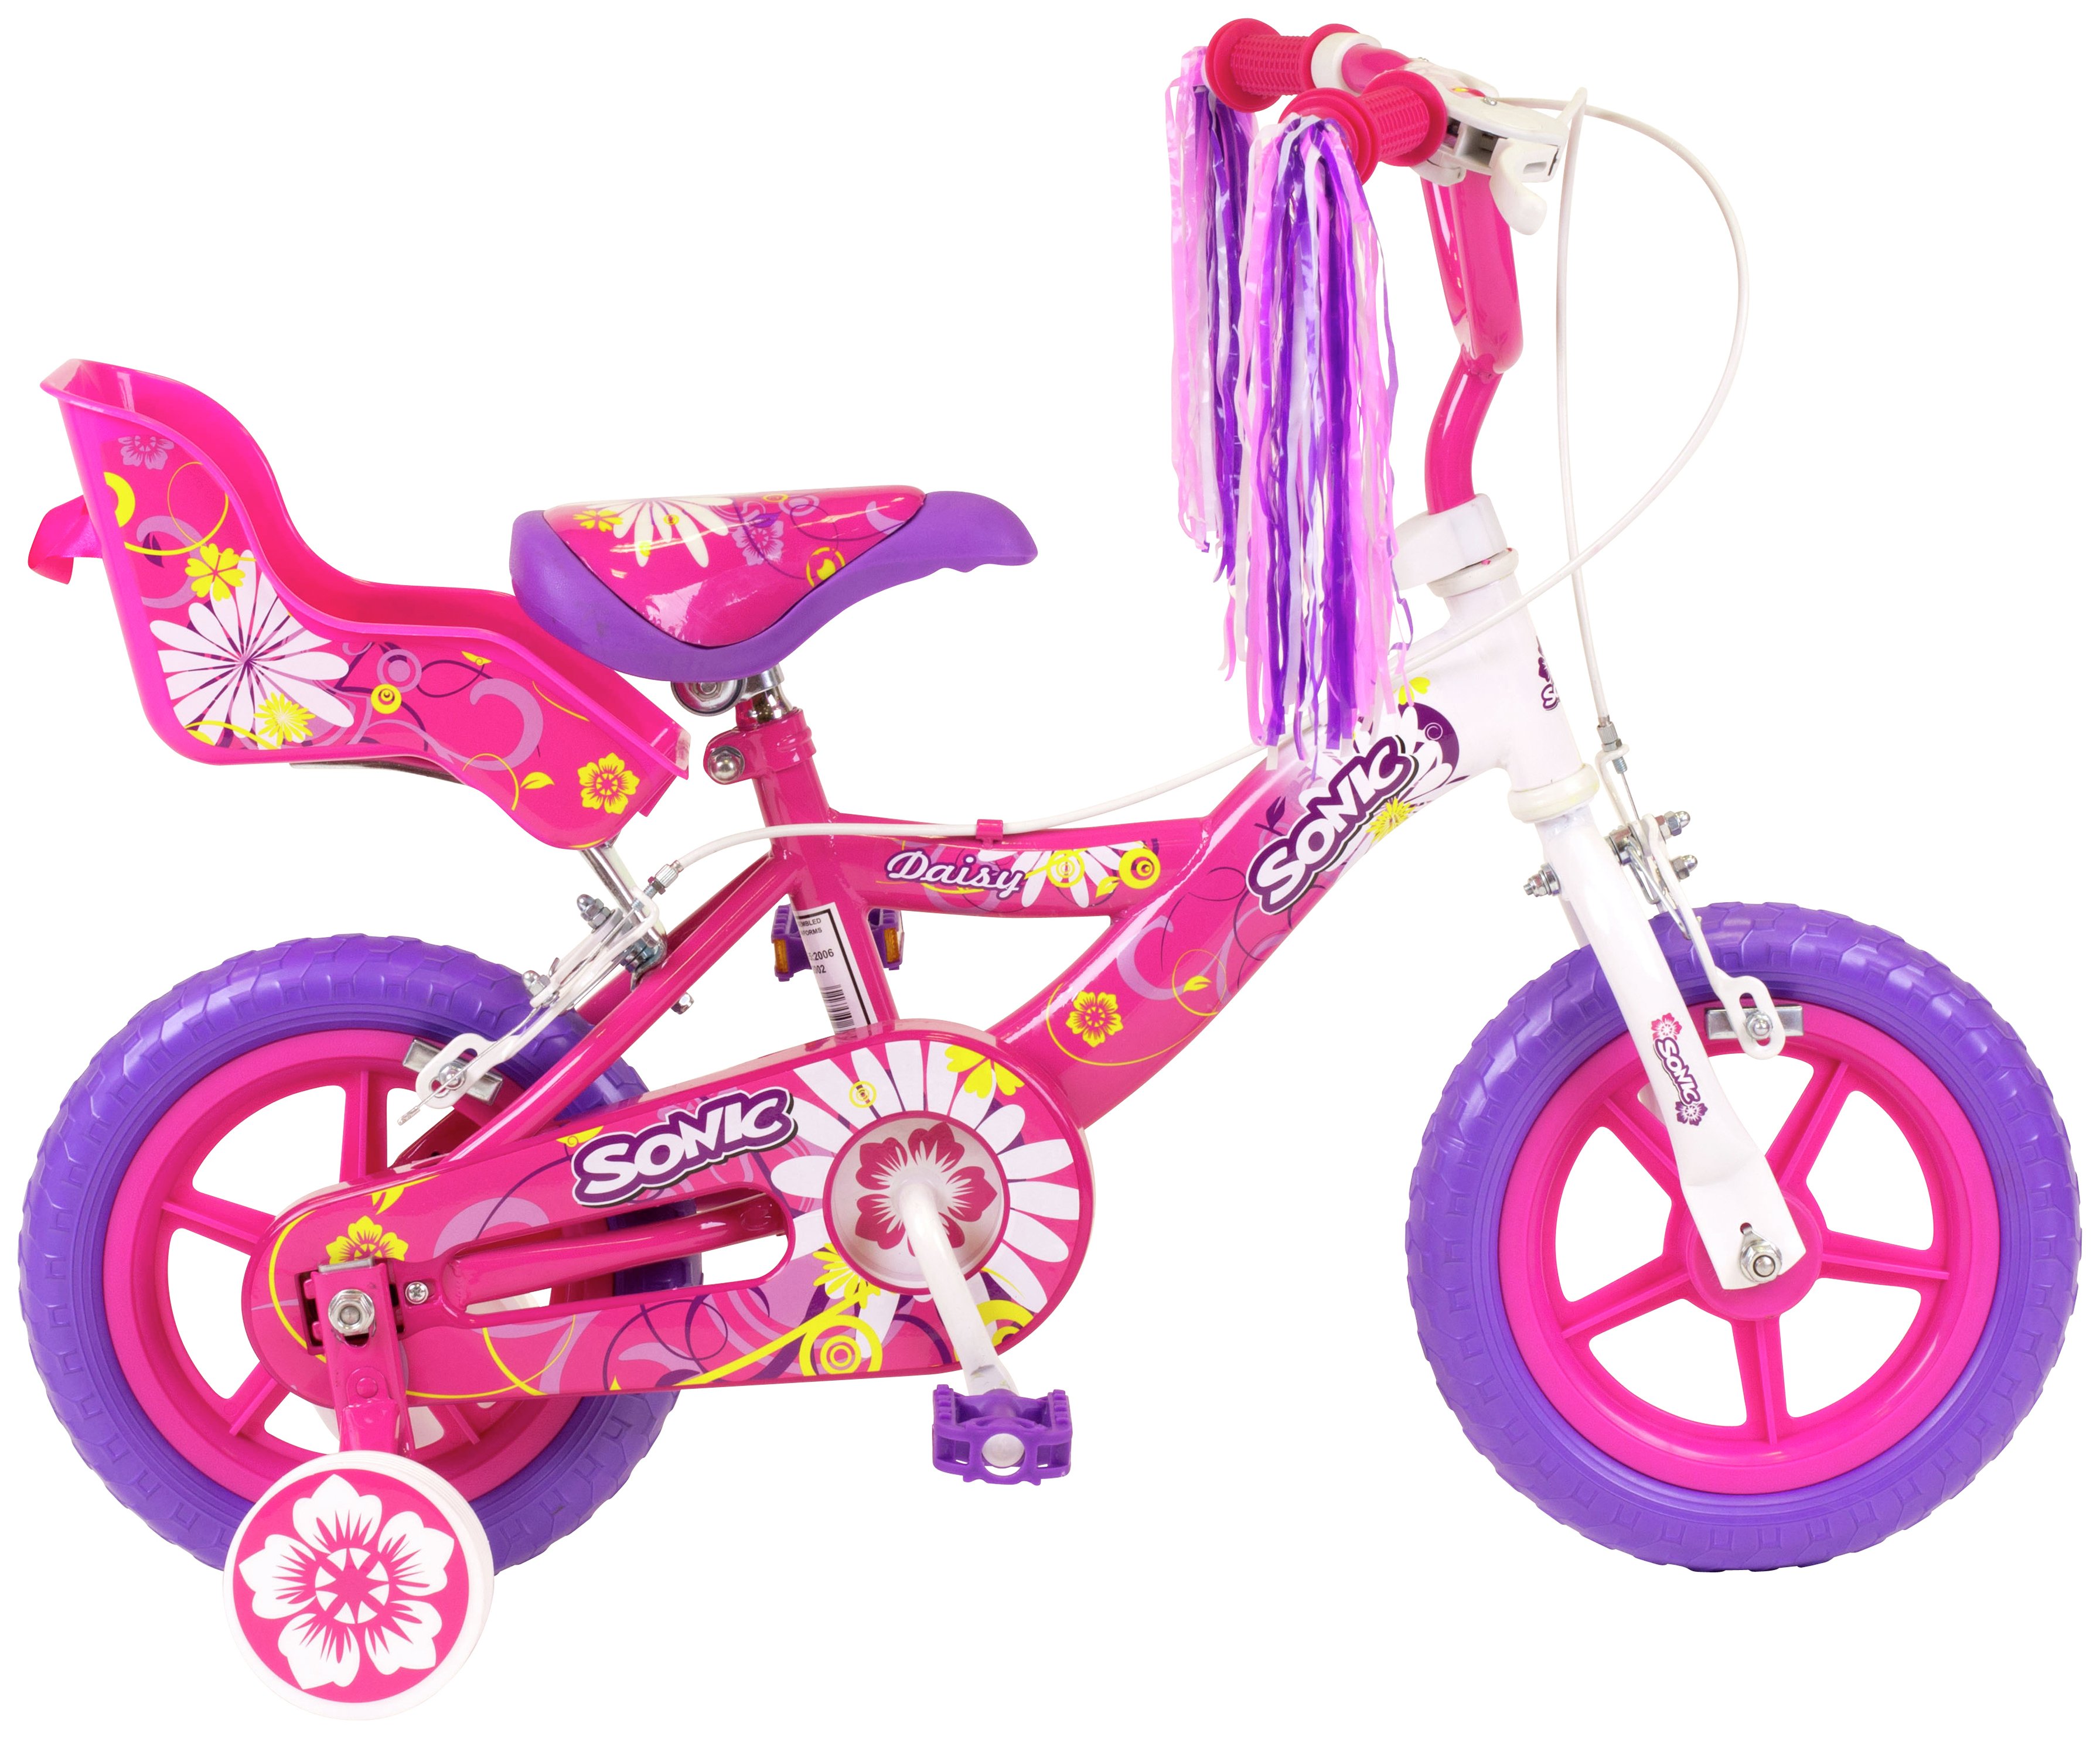 Sonic Daisy 12 Inch Kids Bike review